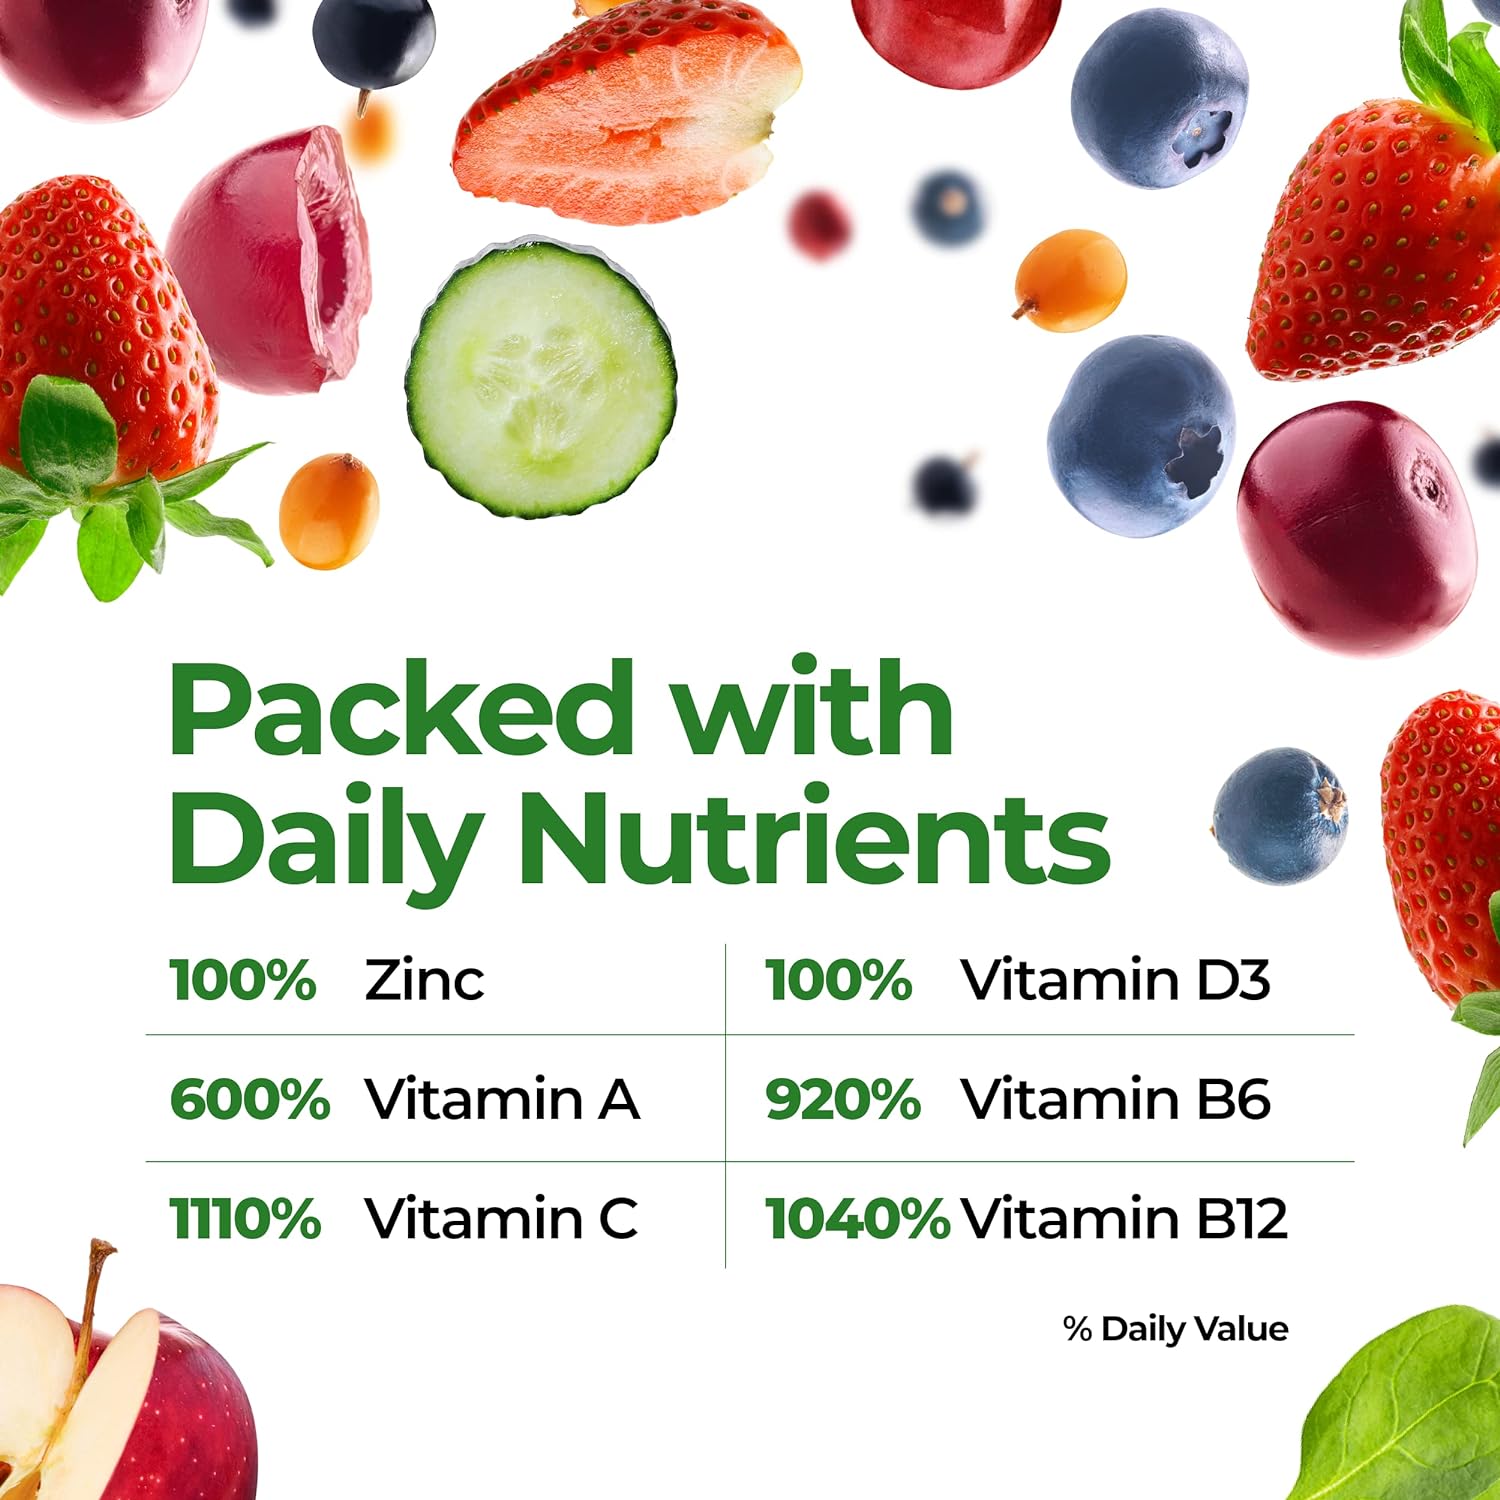 FeelGood Superfoods Vita Fruits and Veggies Immune Support Shot Supple